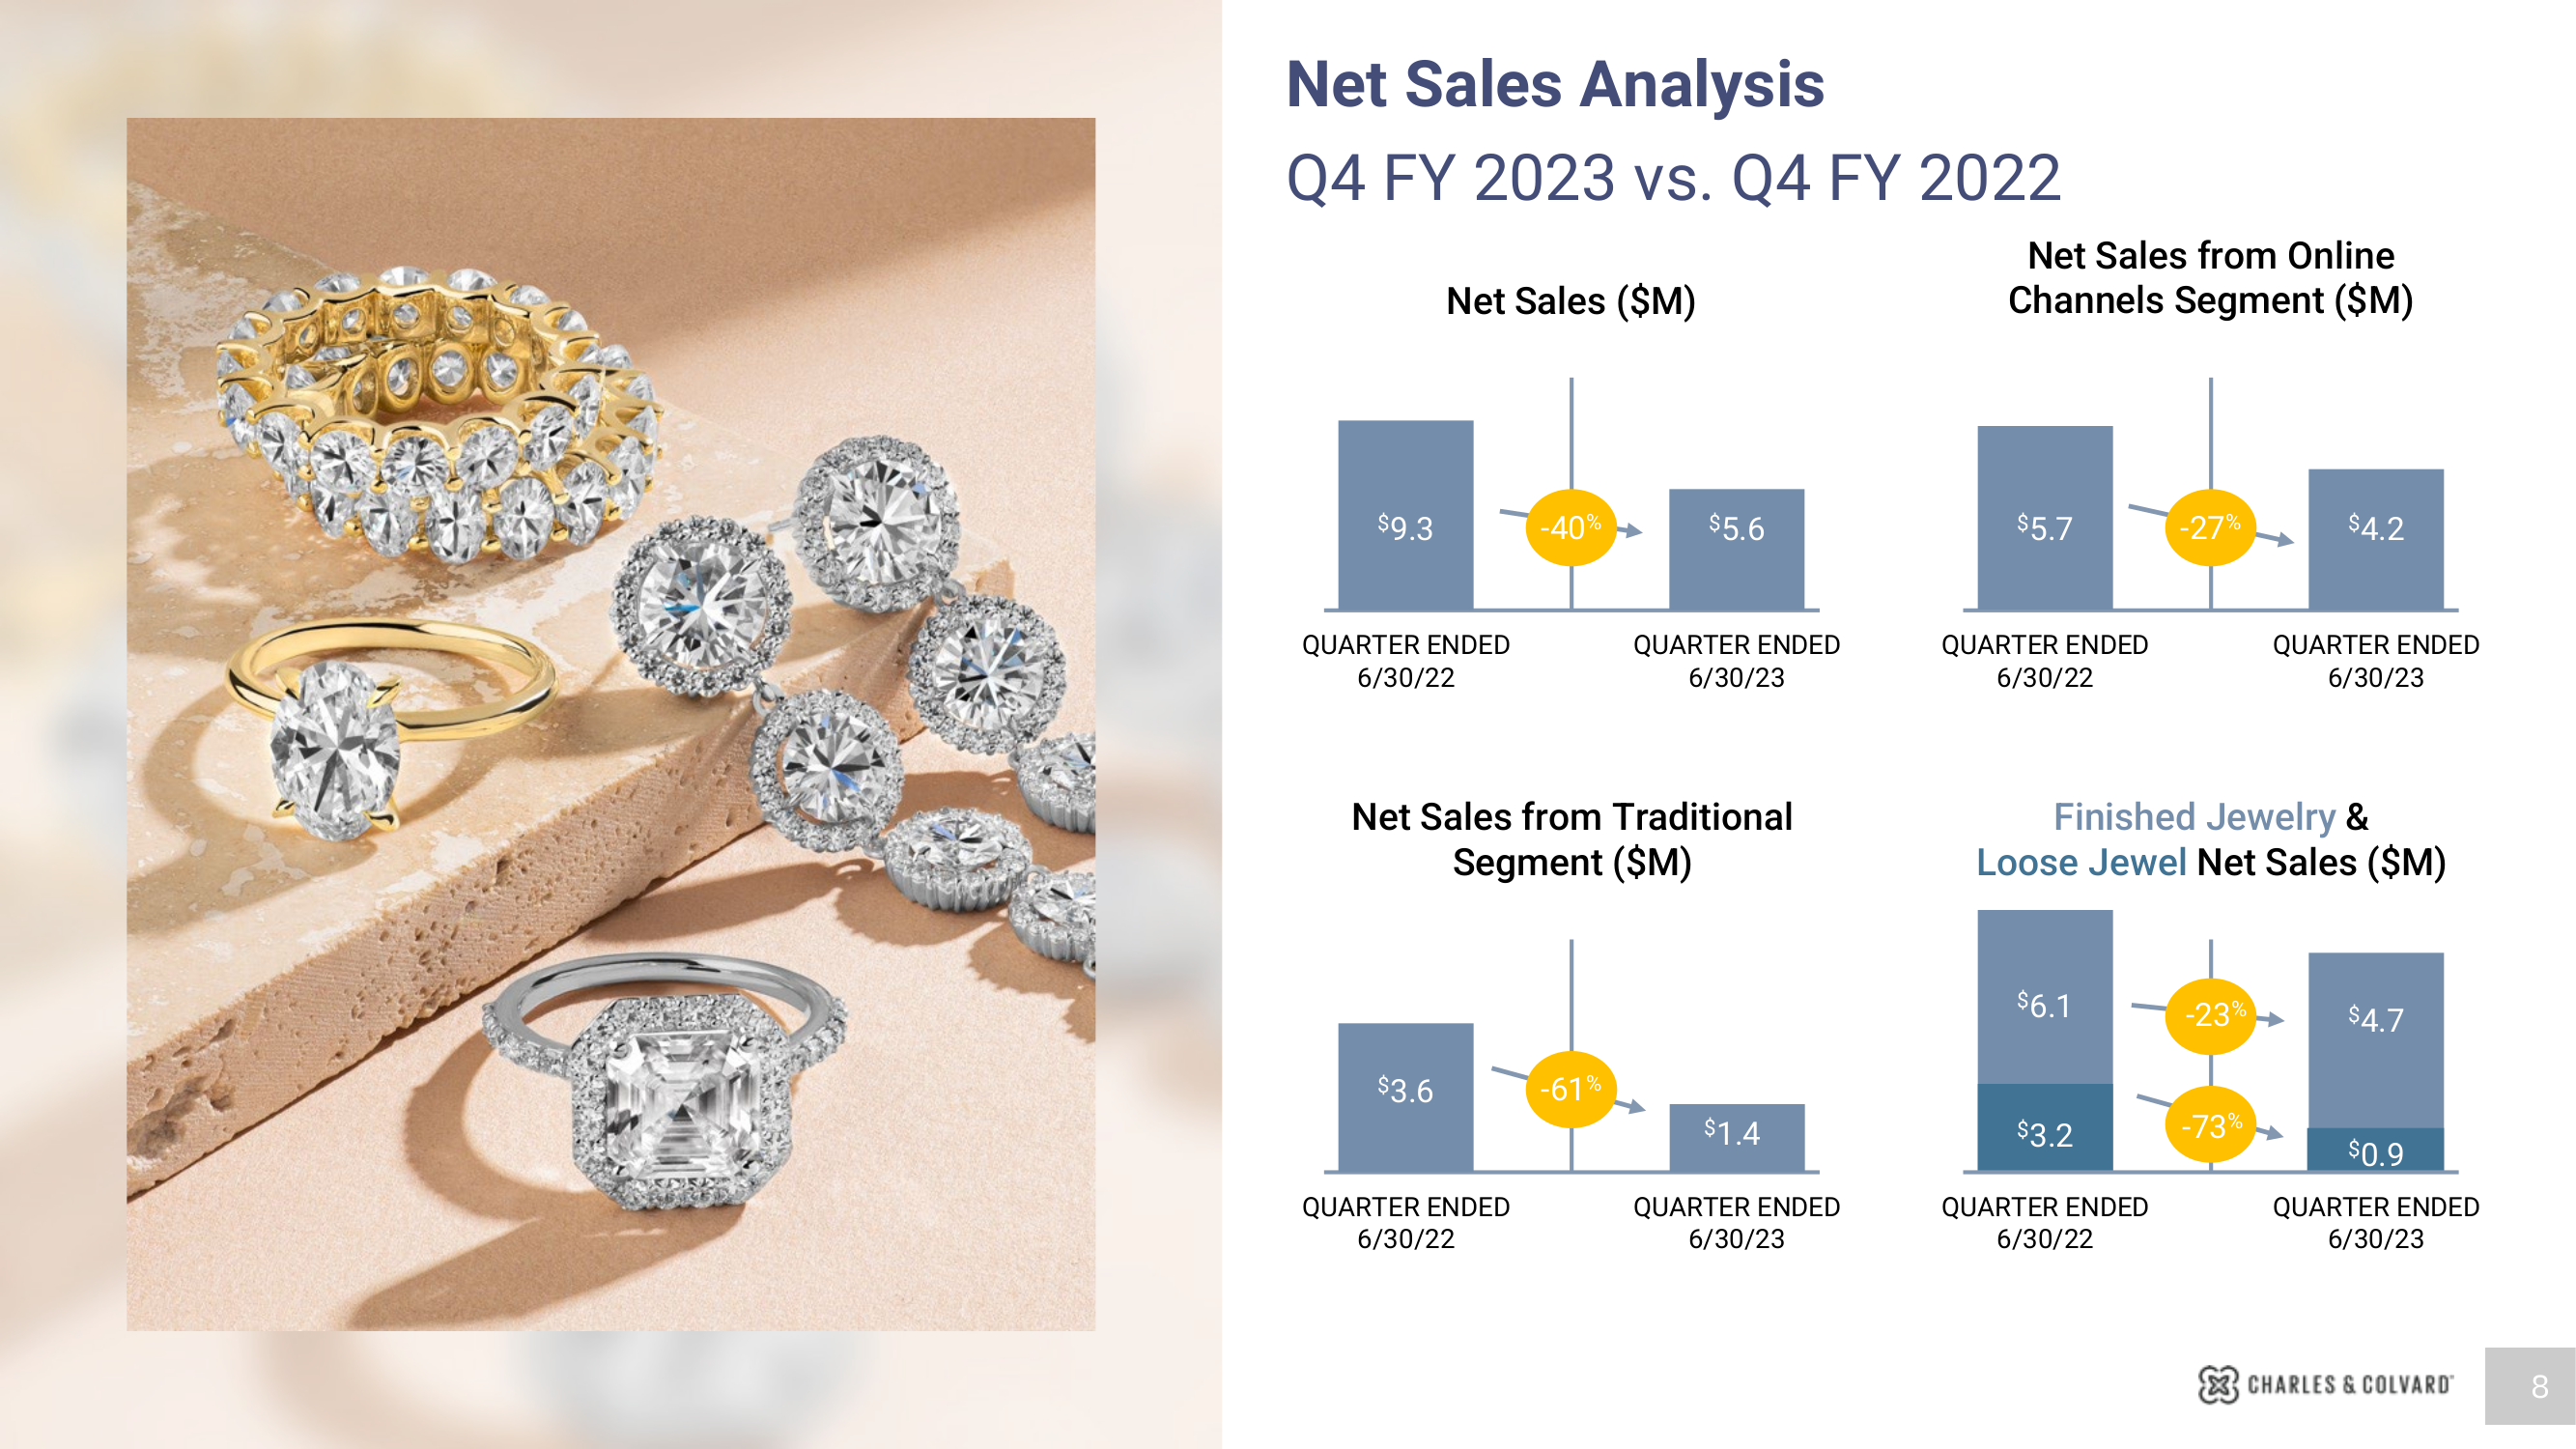 Net Sales Analysis 
